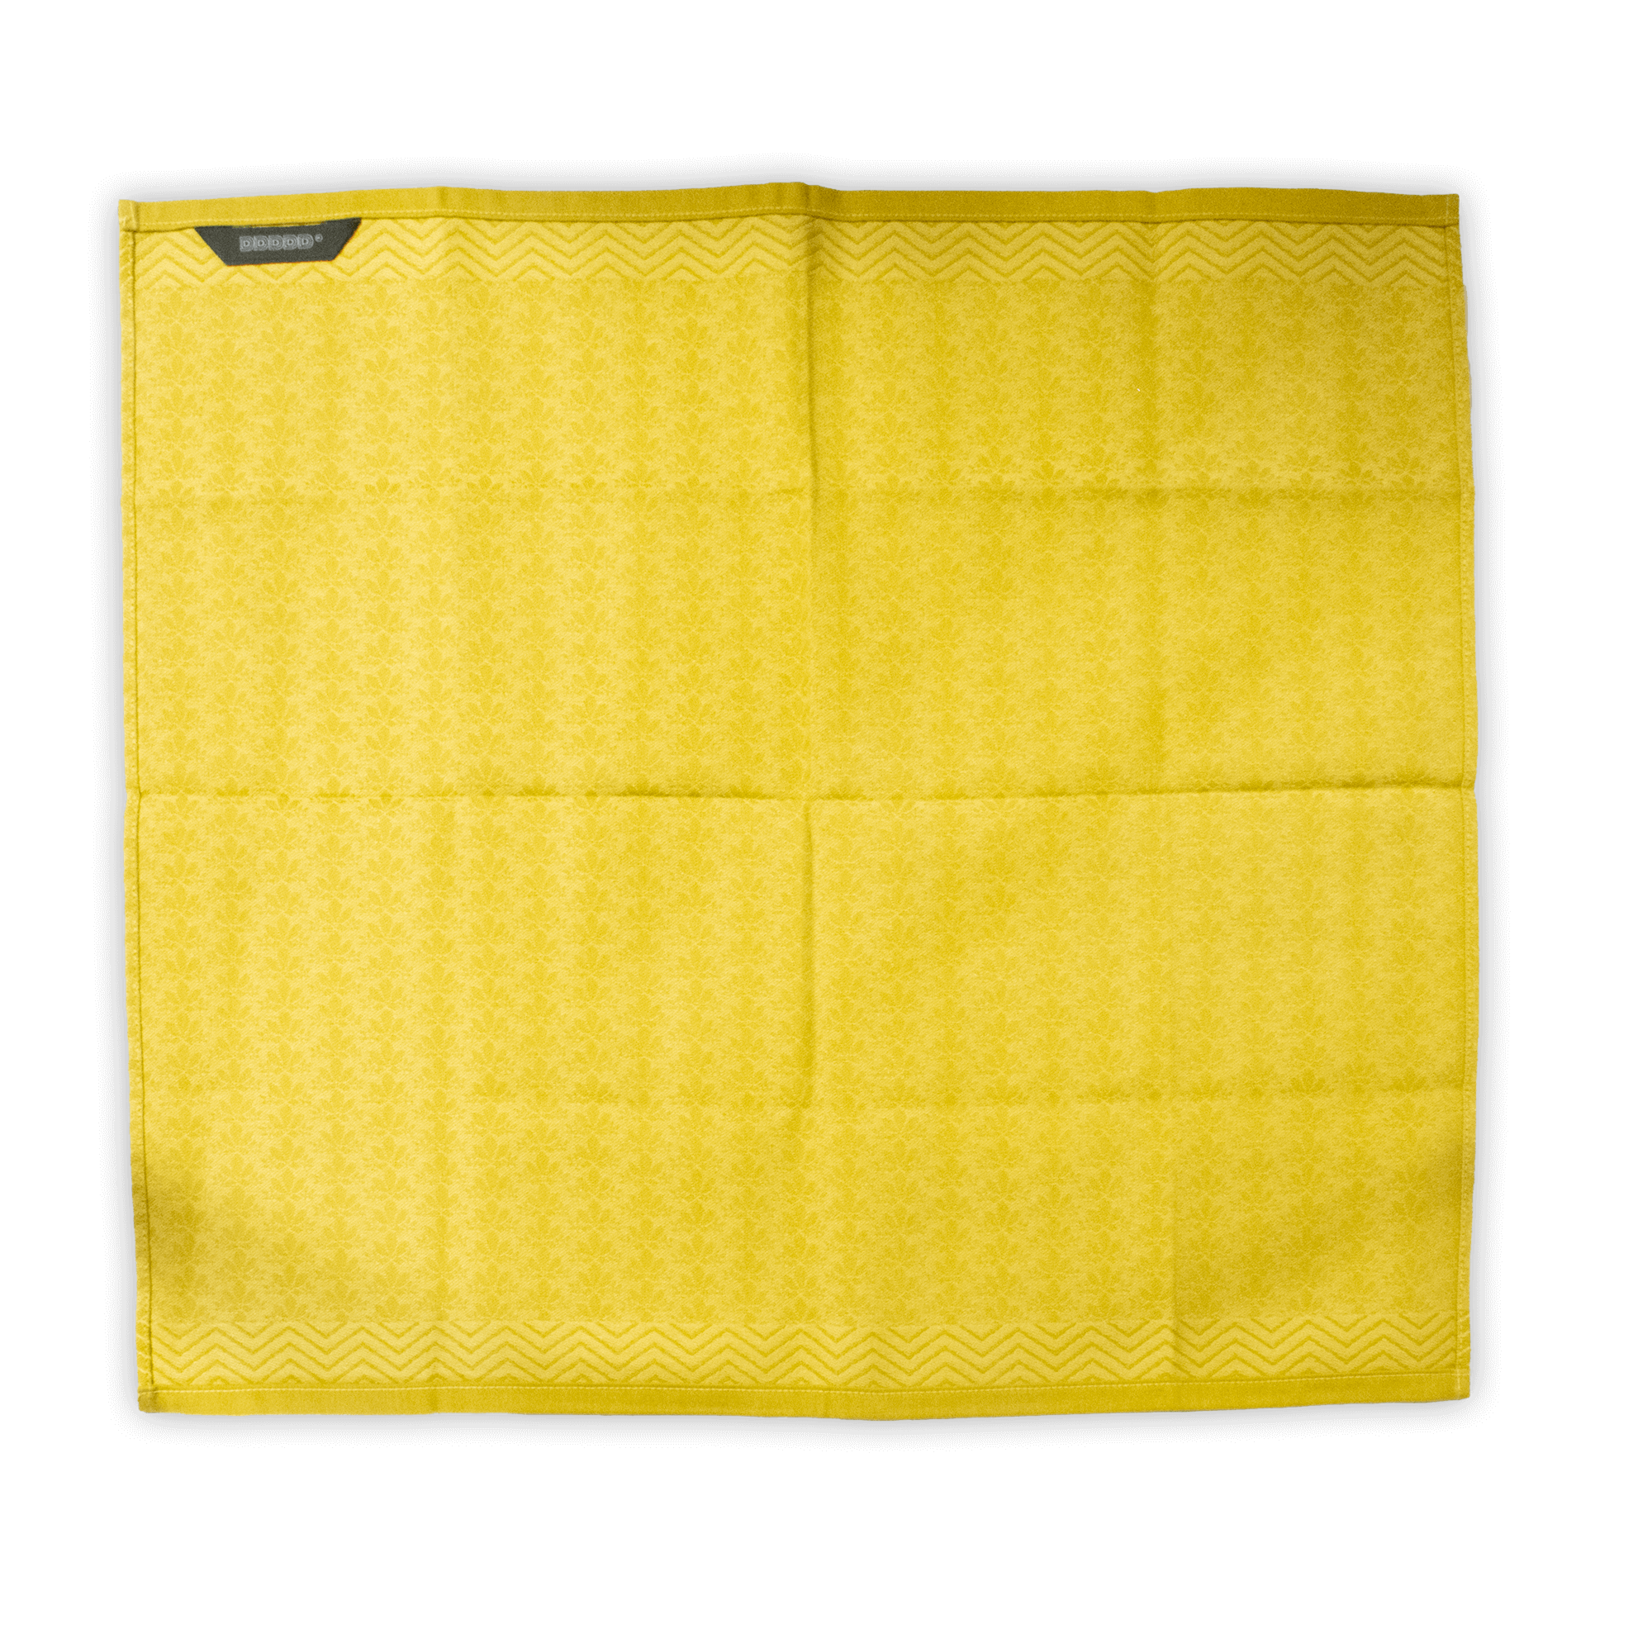 DDDDD DDDDD Tea Towel - Petals Ochre Yellow